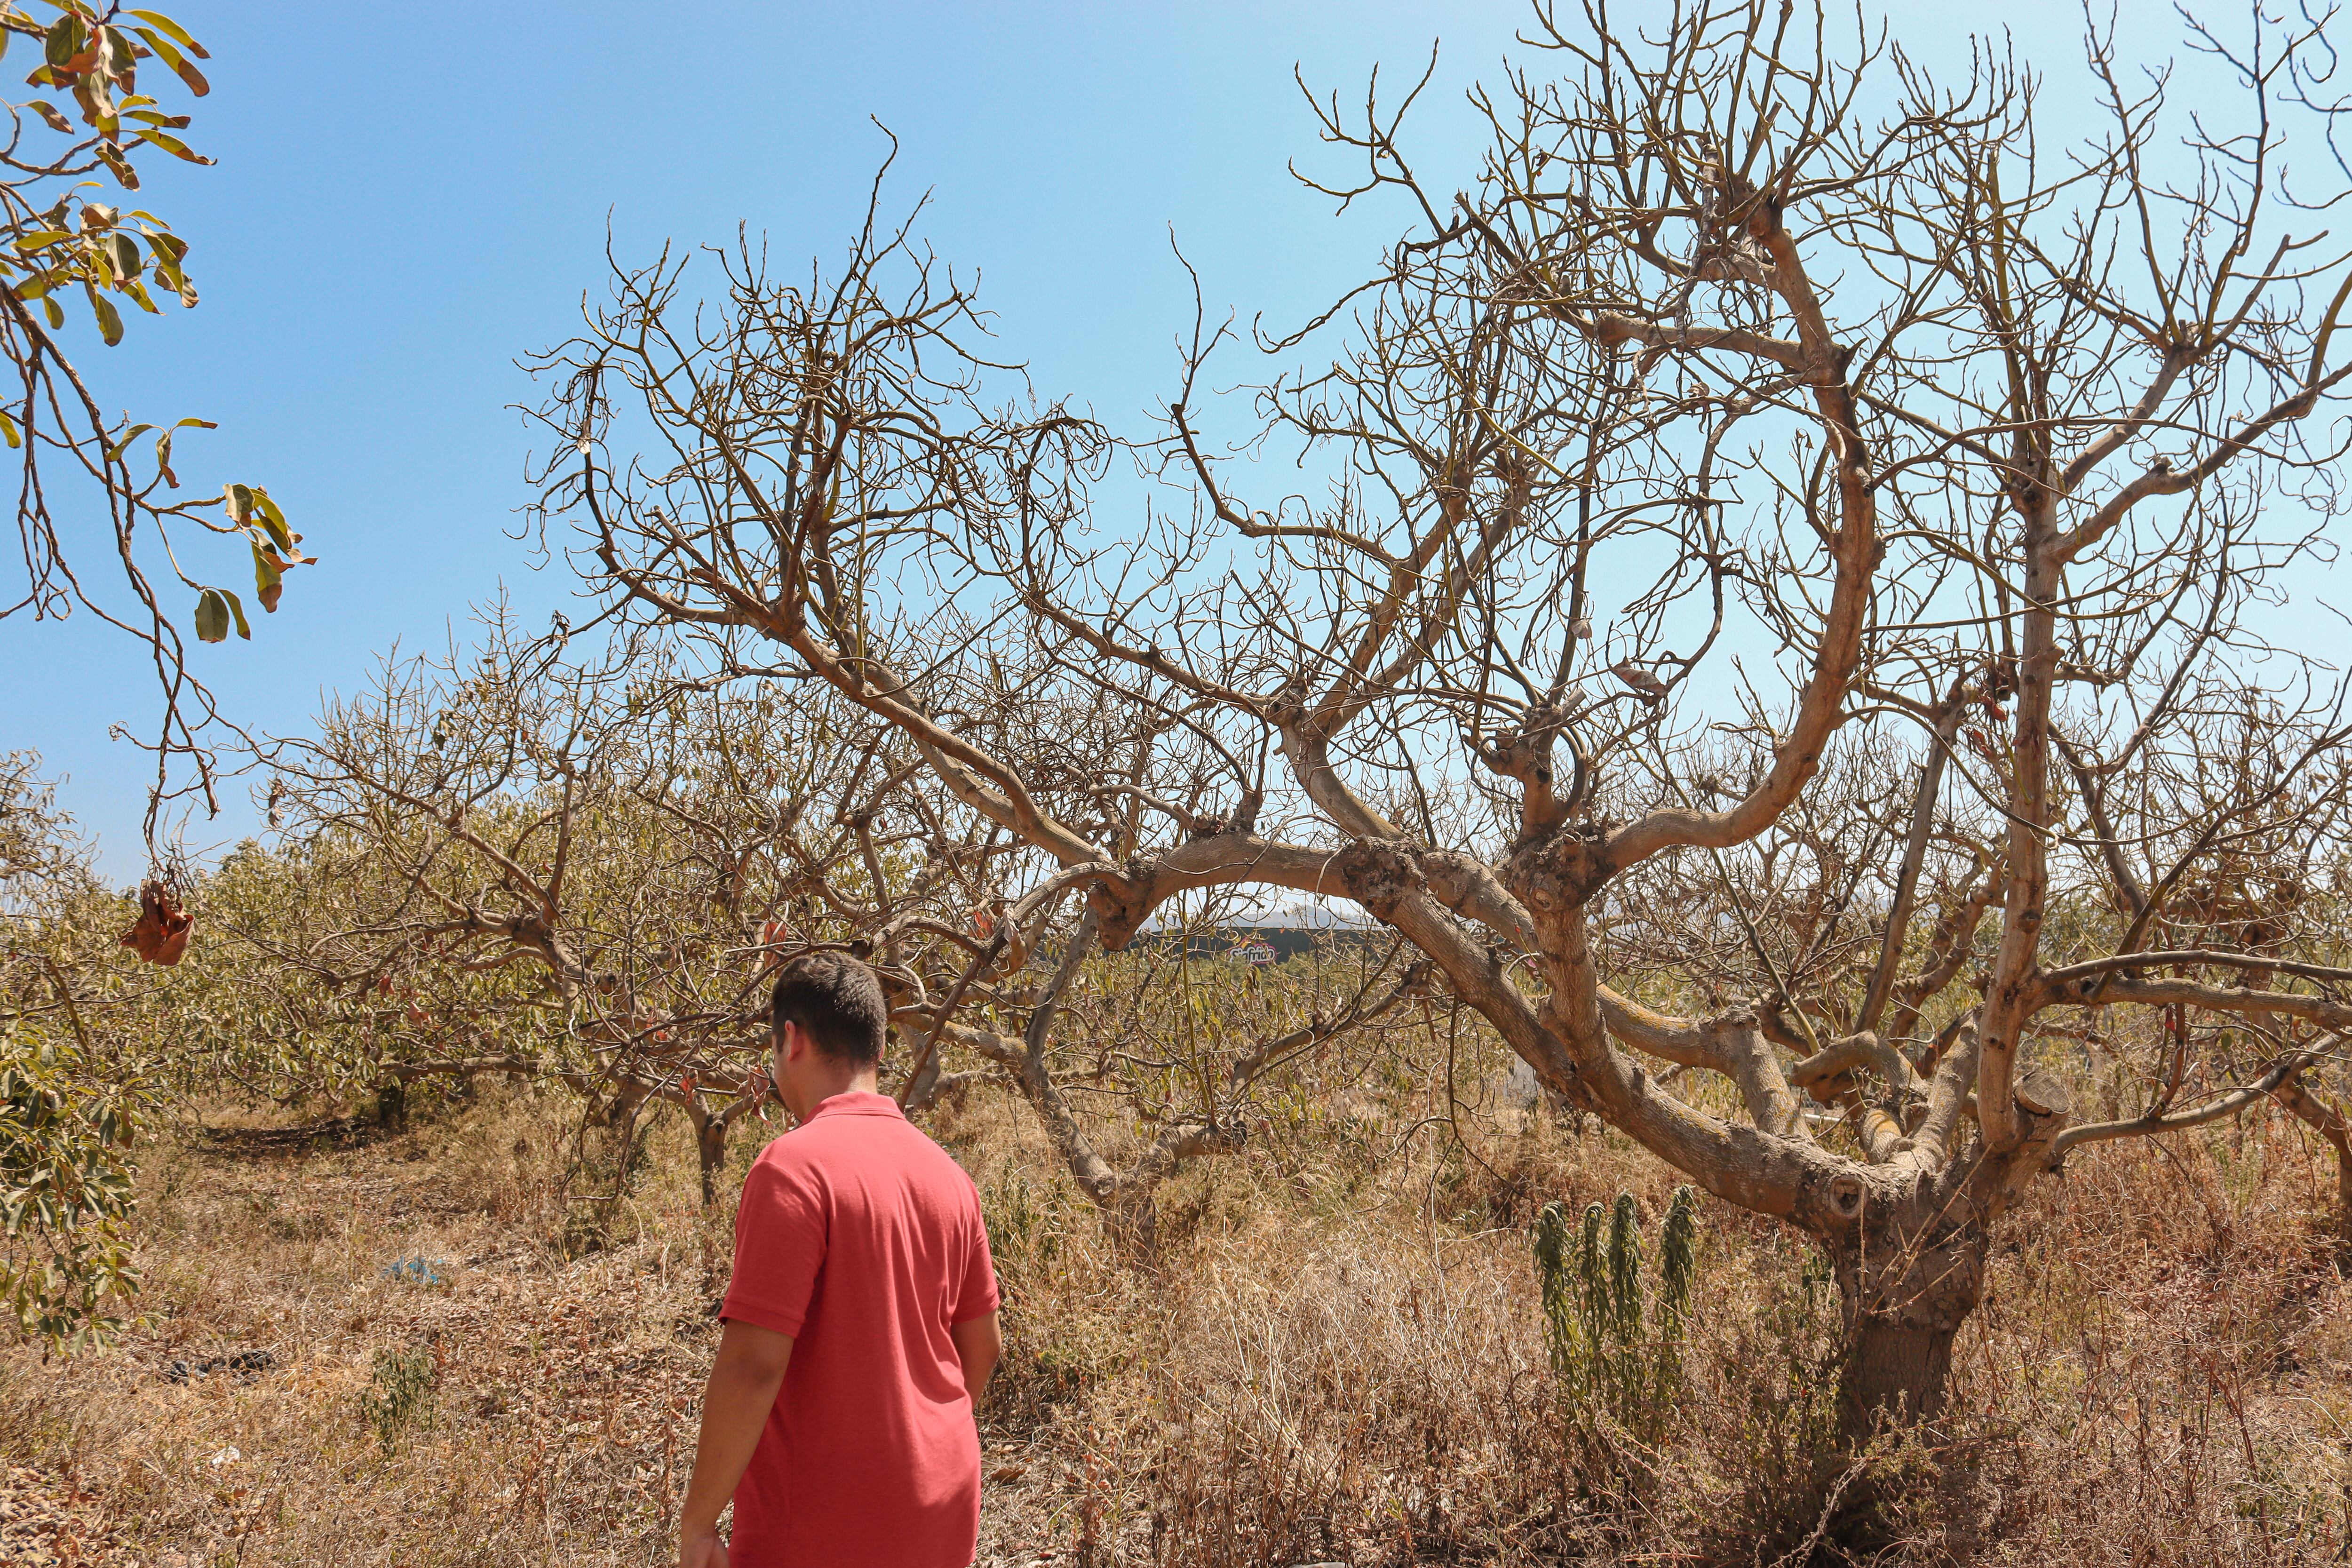 Paco Fortes camina entre ejemplares de árboles de aguacate totalmente secos.